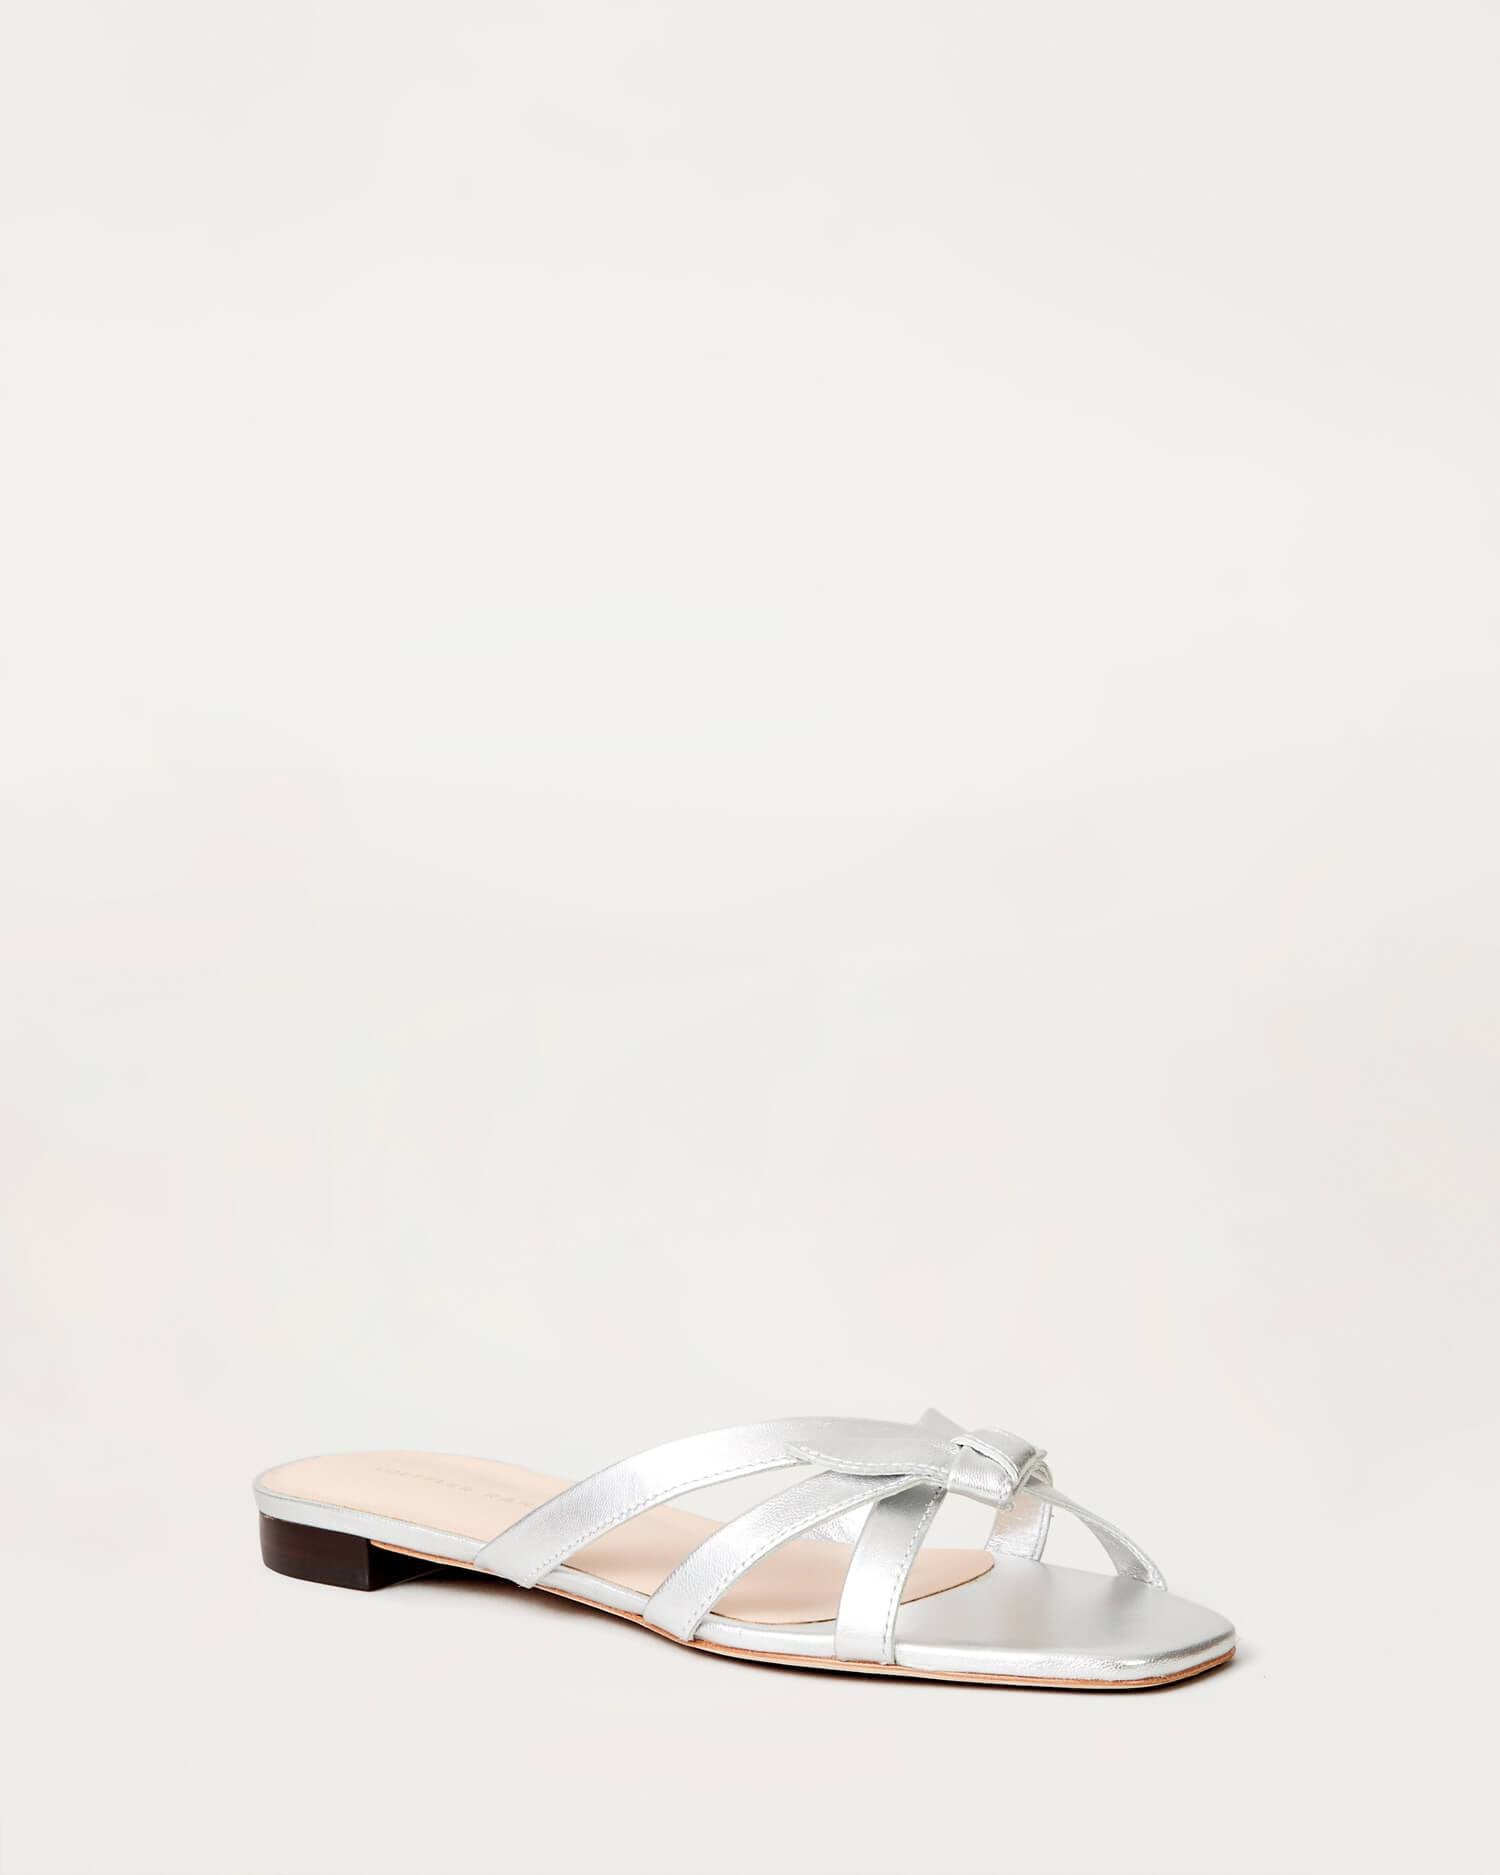 loeffler randall silver sandals